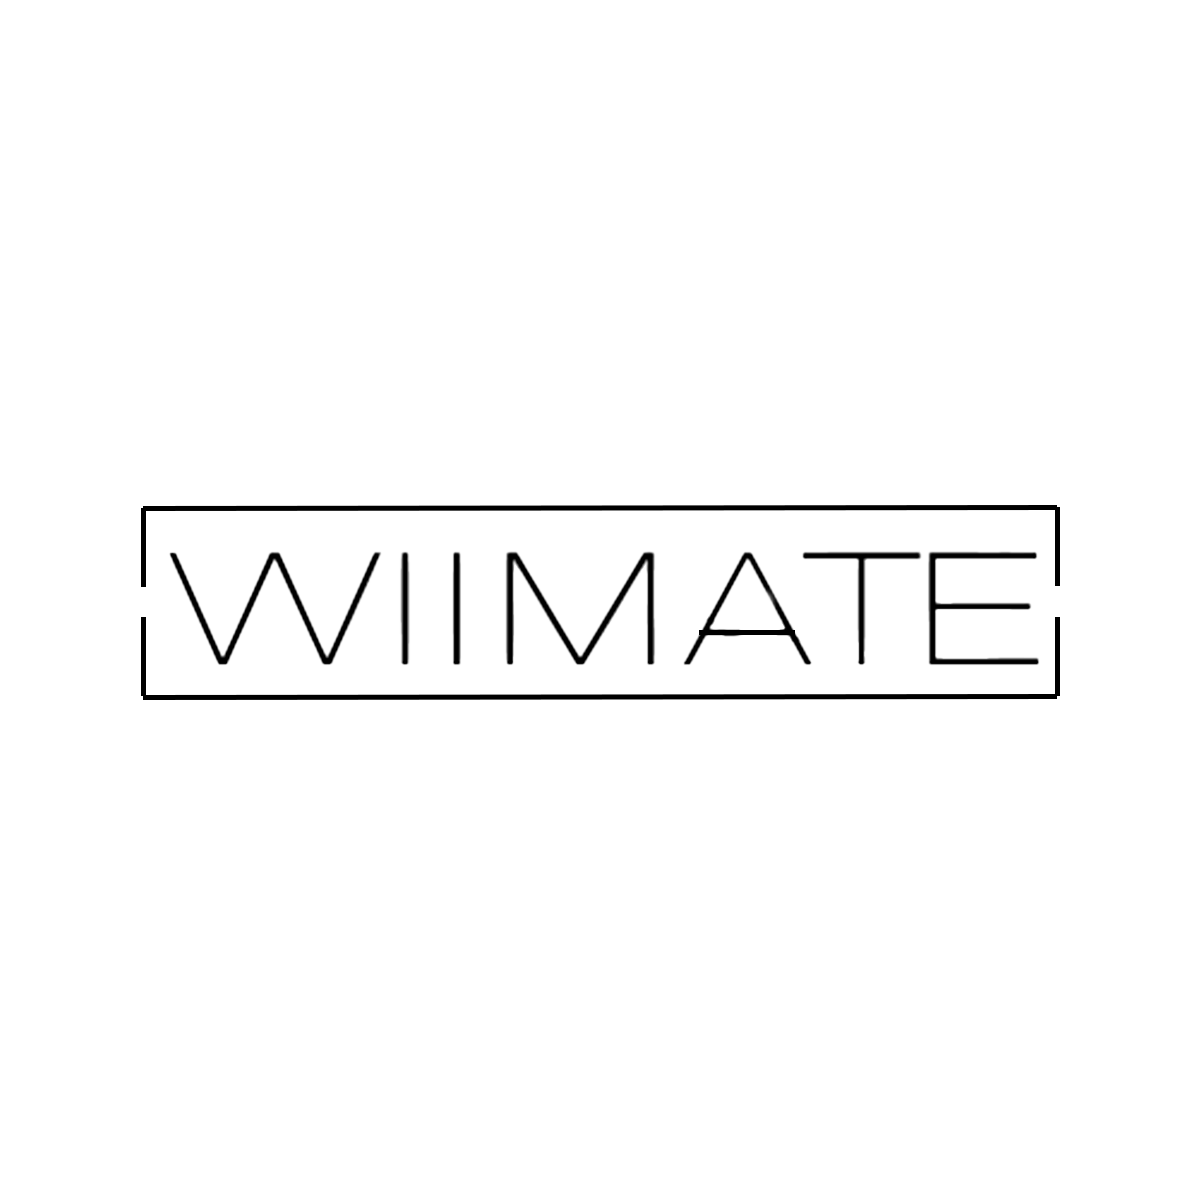 Wiimate – wiimate